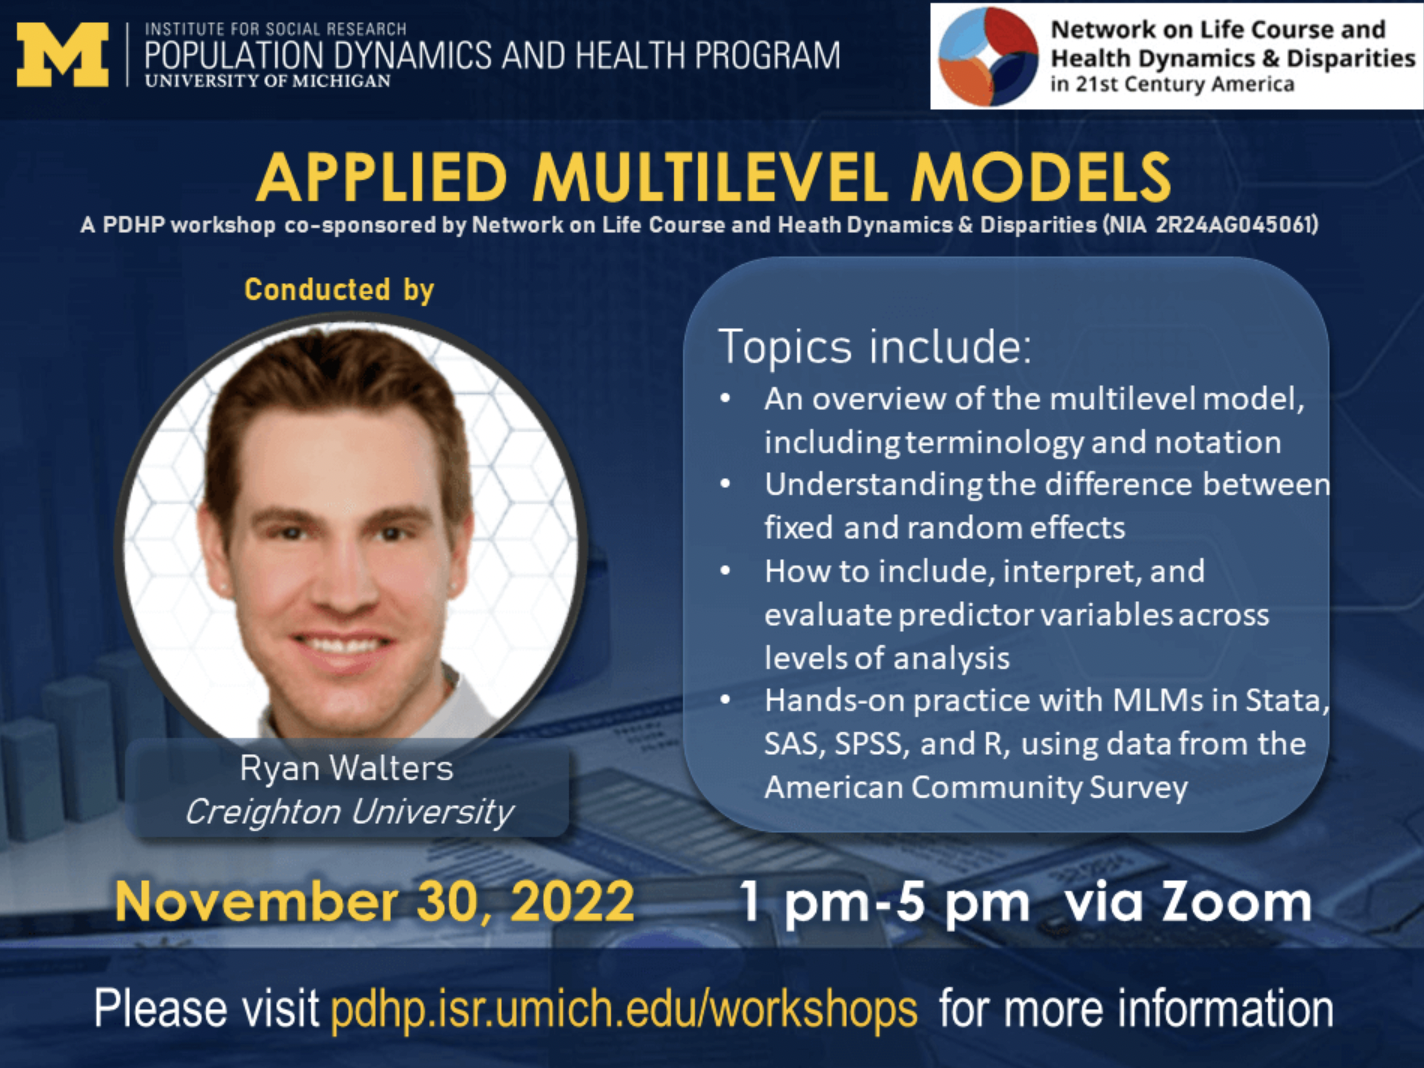 Applied Multilevel Models: Nov 30, 2022 1-5 via Zoom